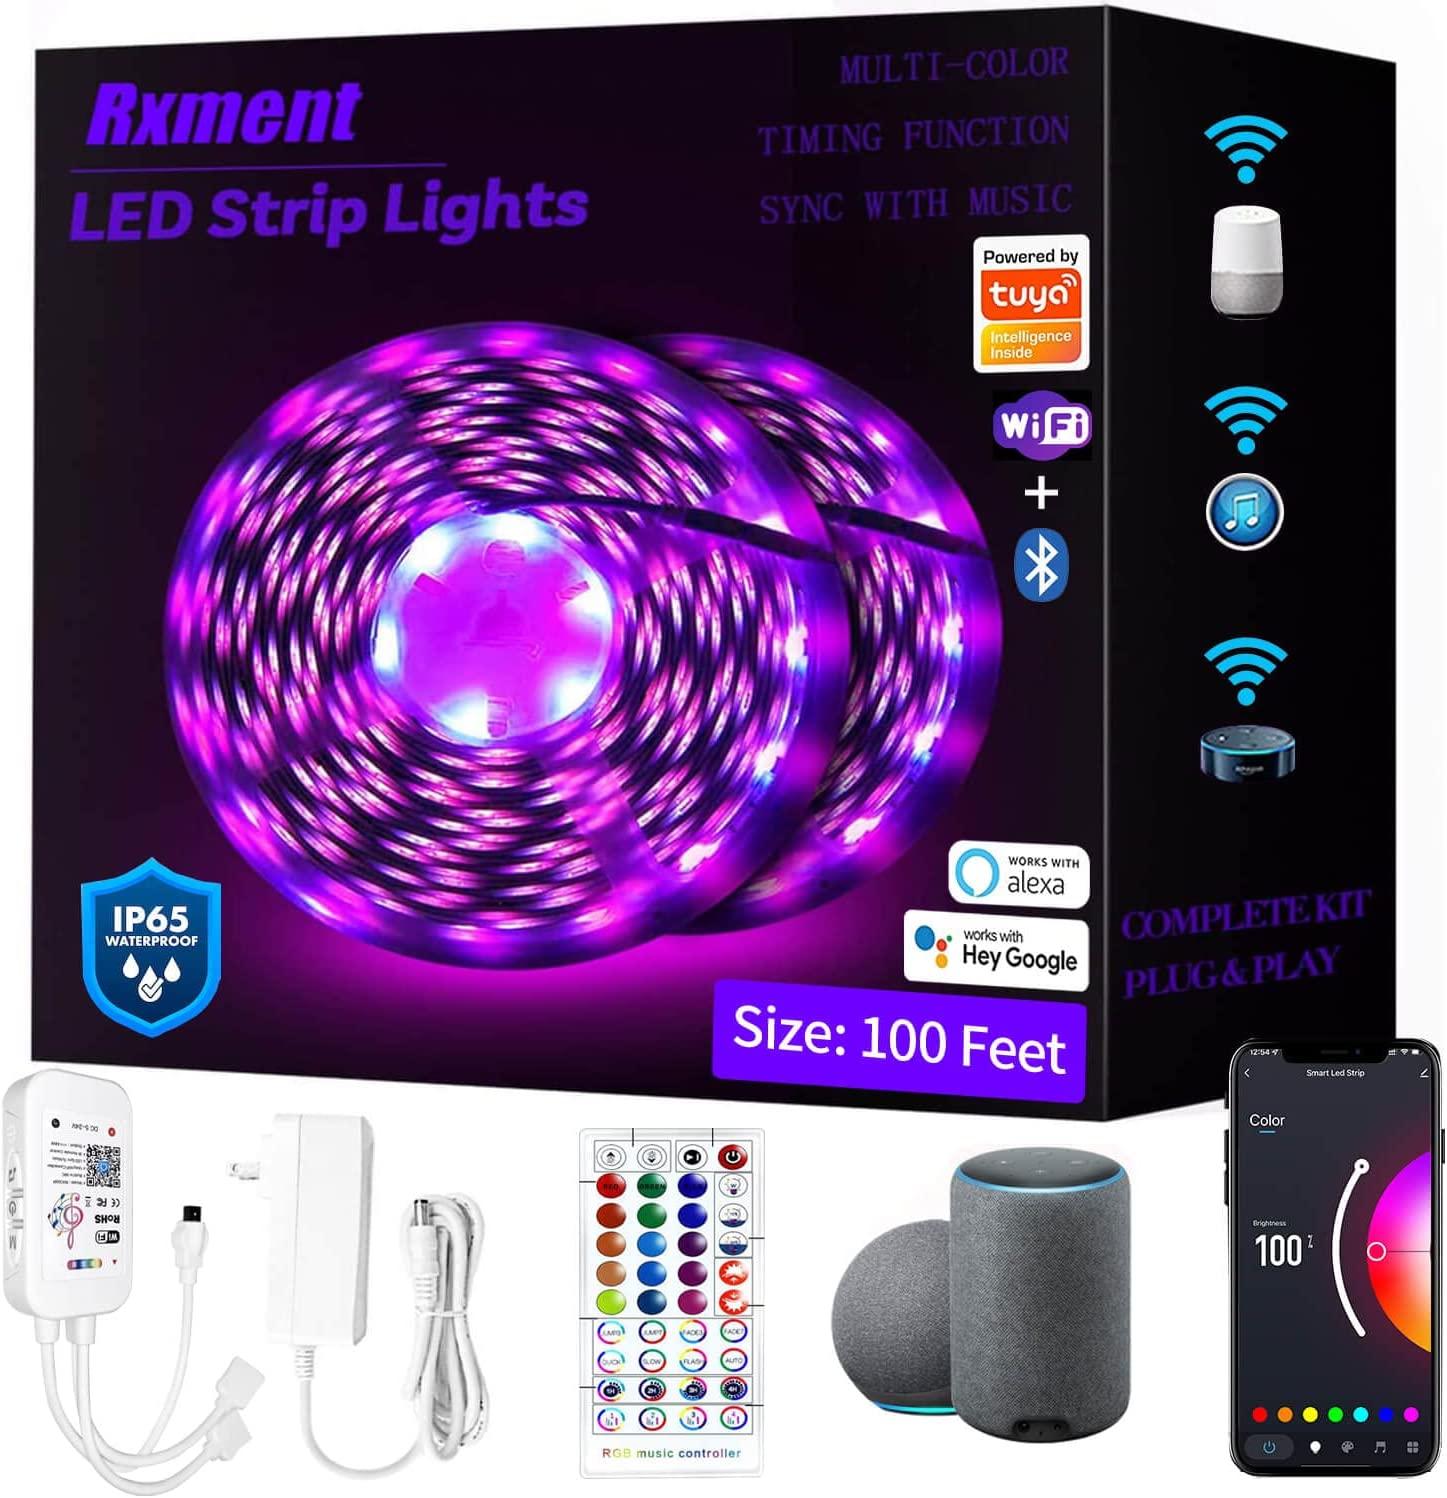 waterproof LED strip lights- Rxment